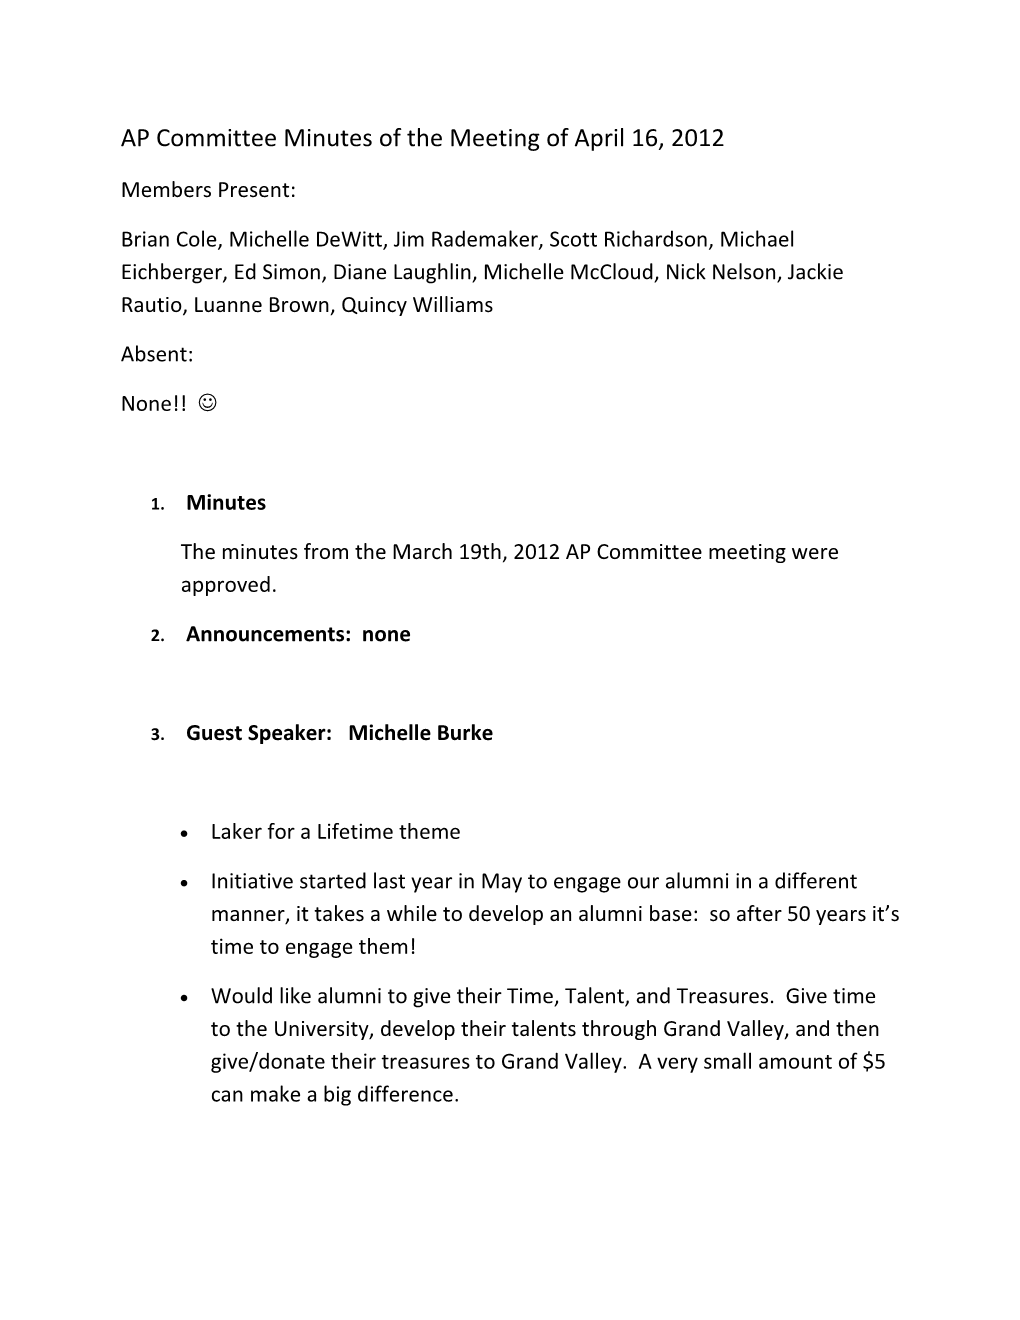 AP Committeeminutes of the Meeting of April 16, 2012